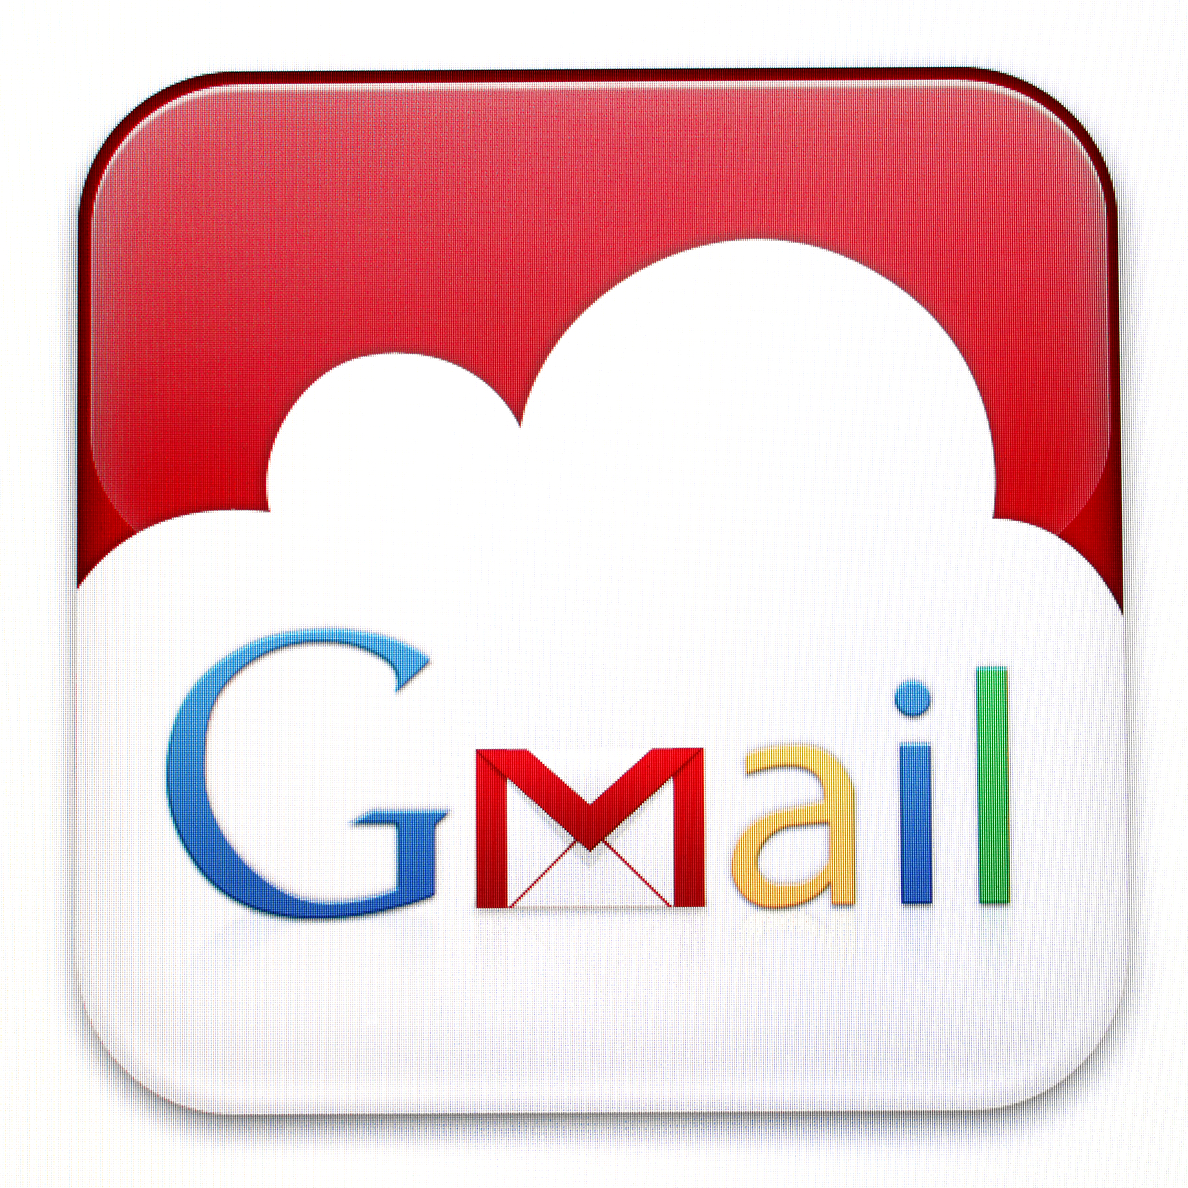 L gmail com. Gmail почта. Иконка gmail. Gmail логотип PNG.